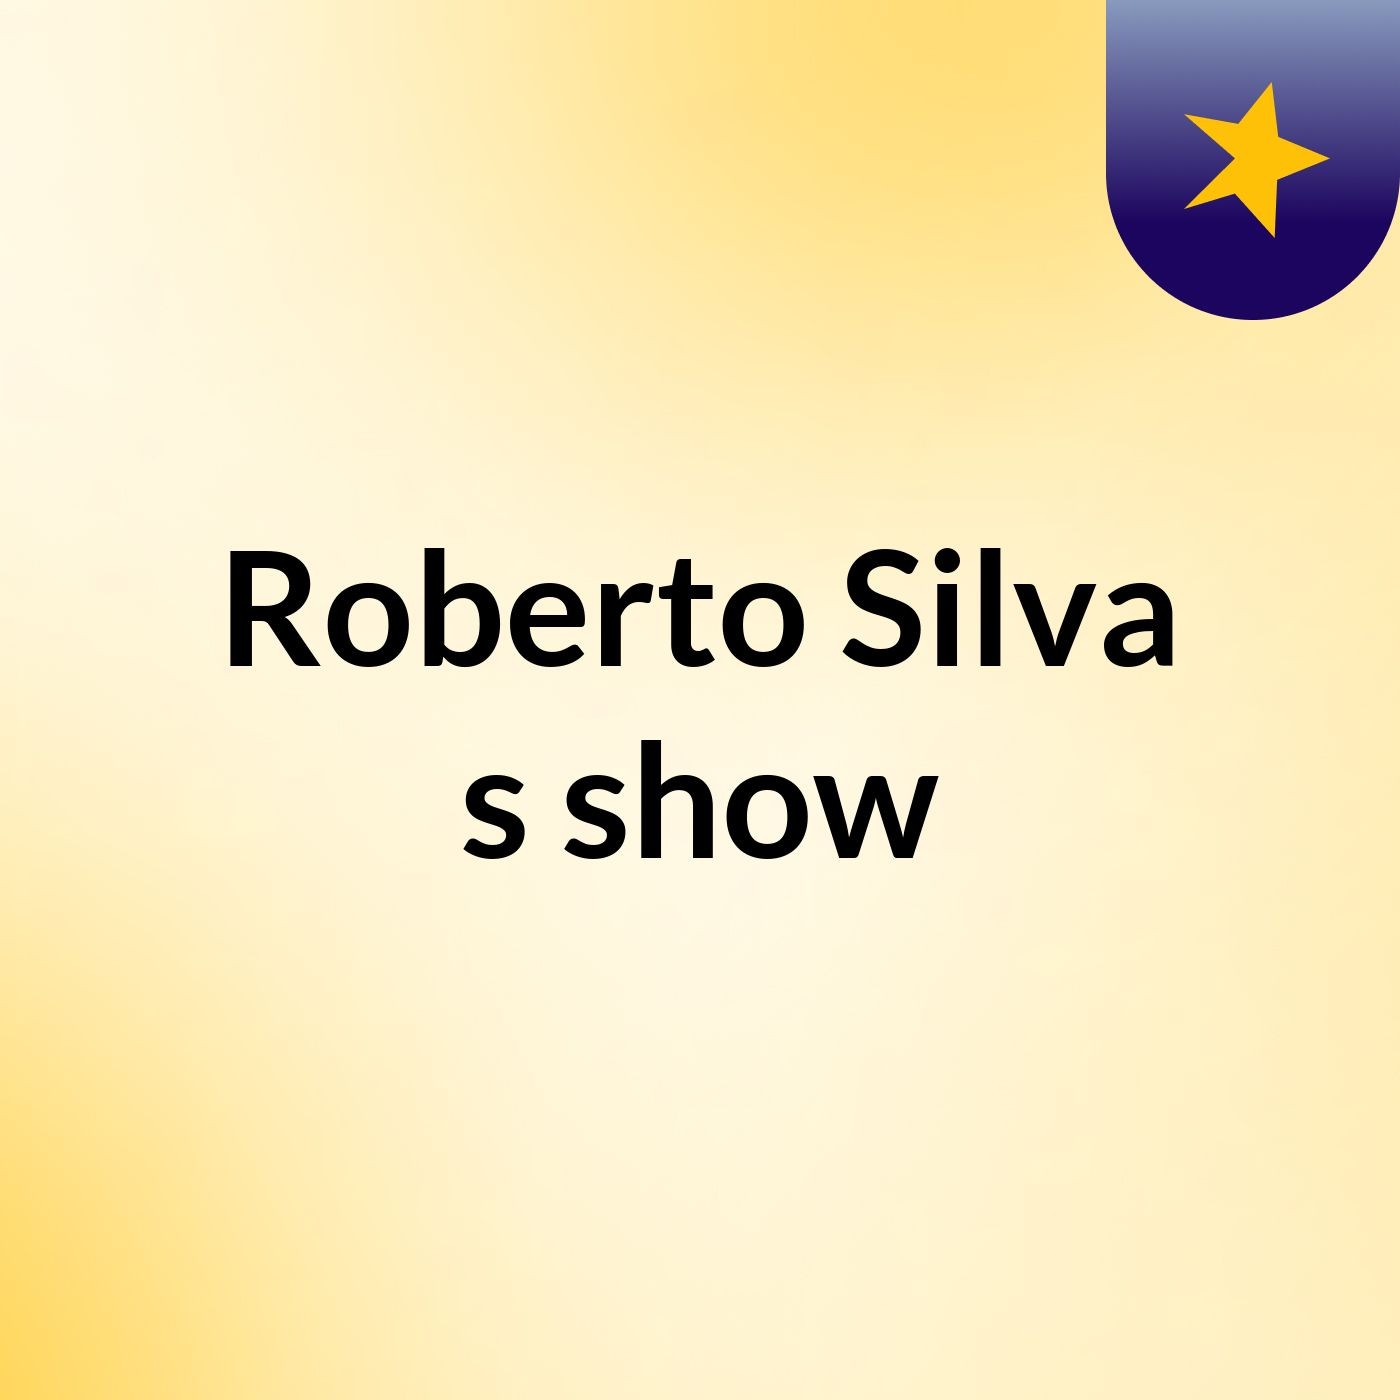 Roberto Silva's show